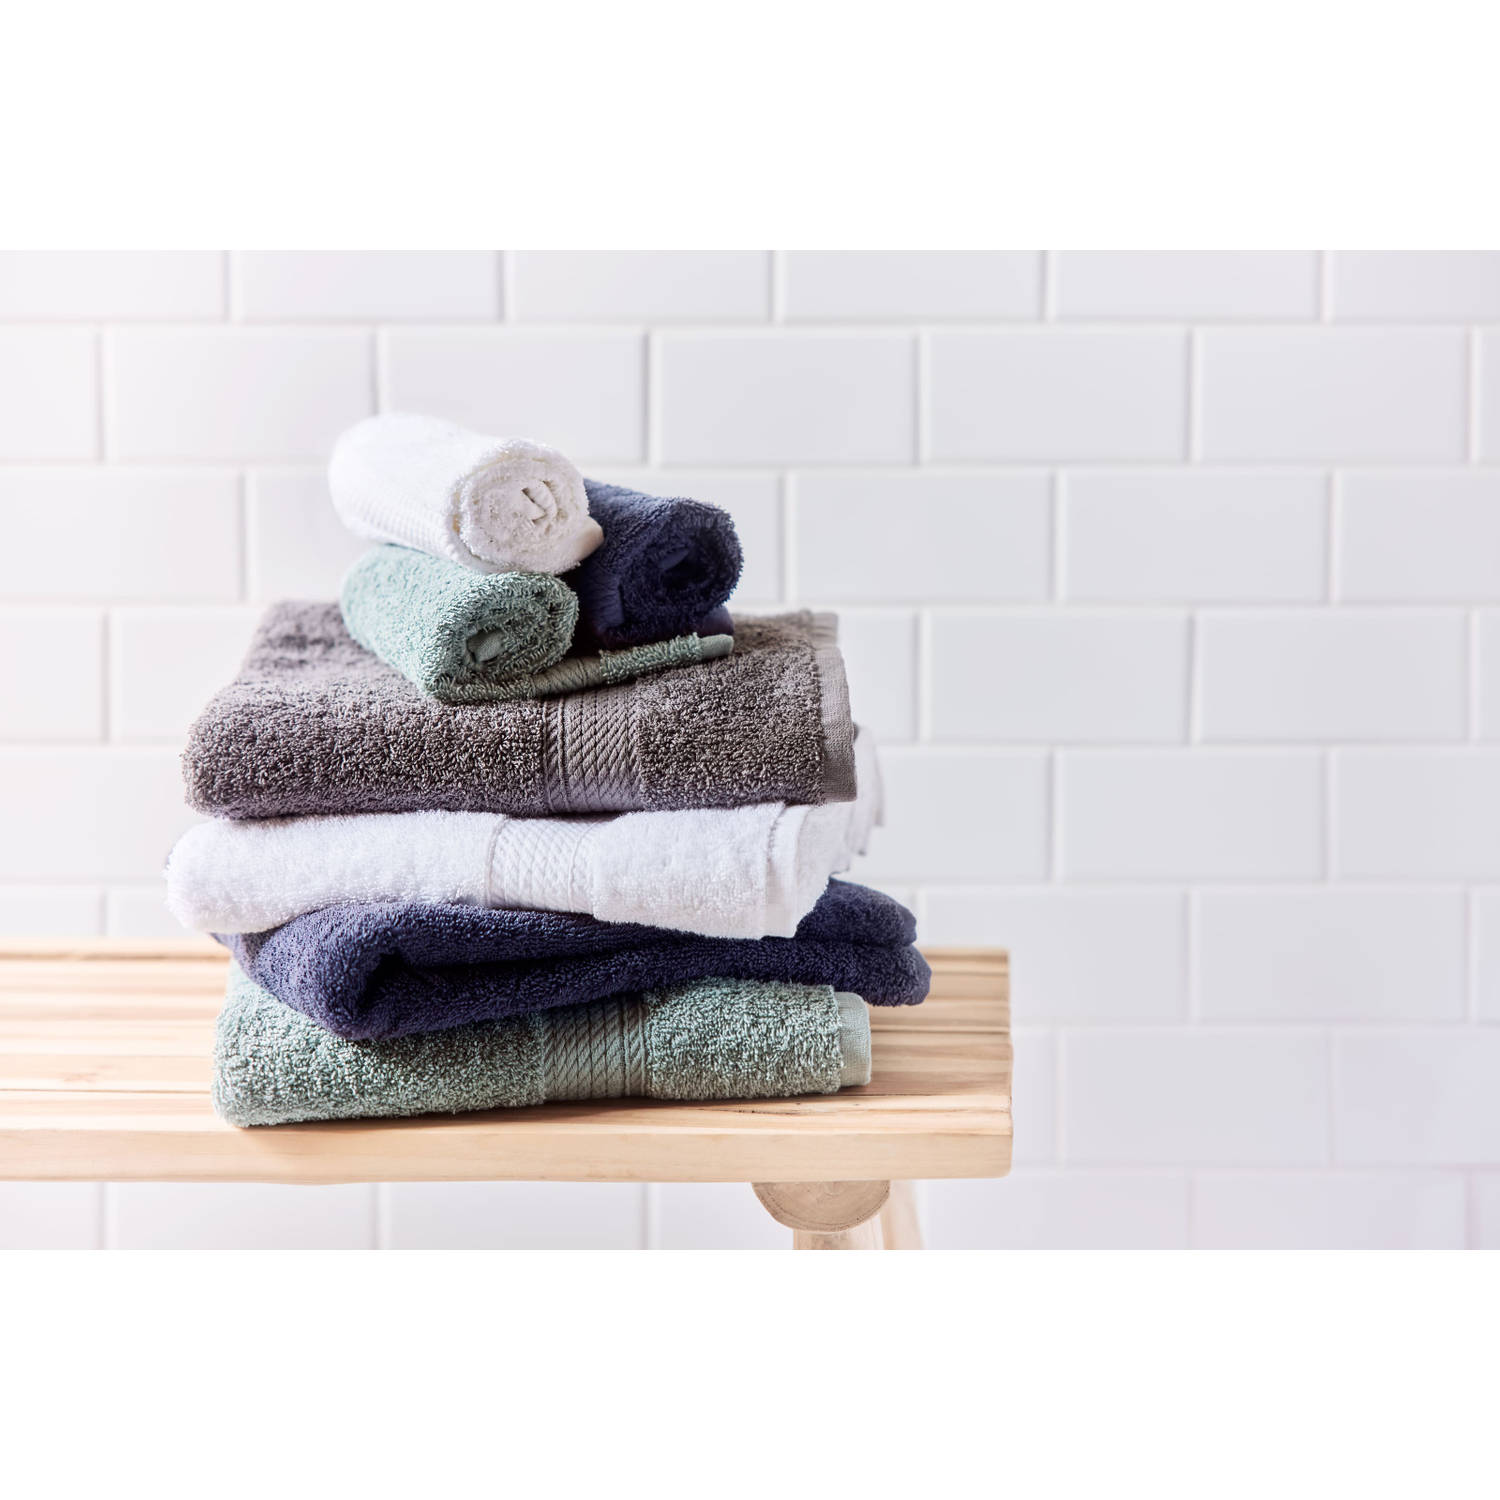 verf gespannen Knipperen Blokker handdoek 500g - blauw - 60x110 cm | Blokker